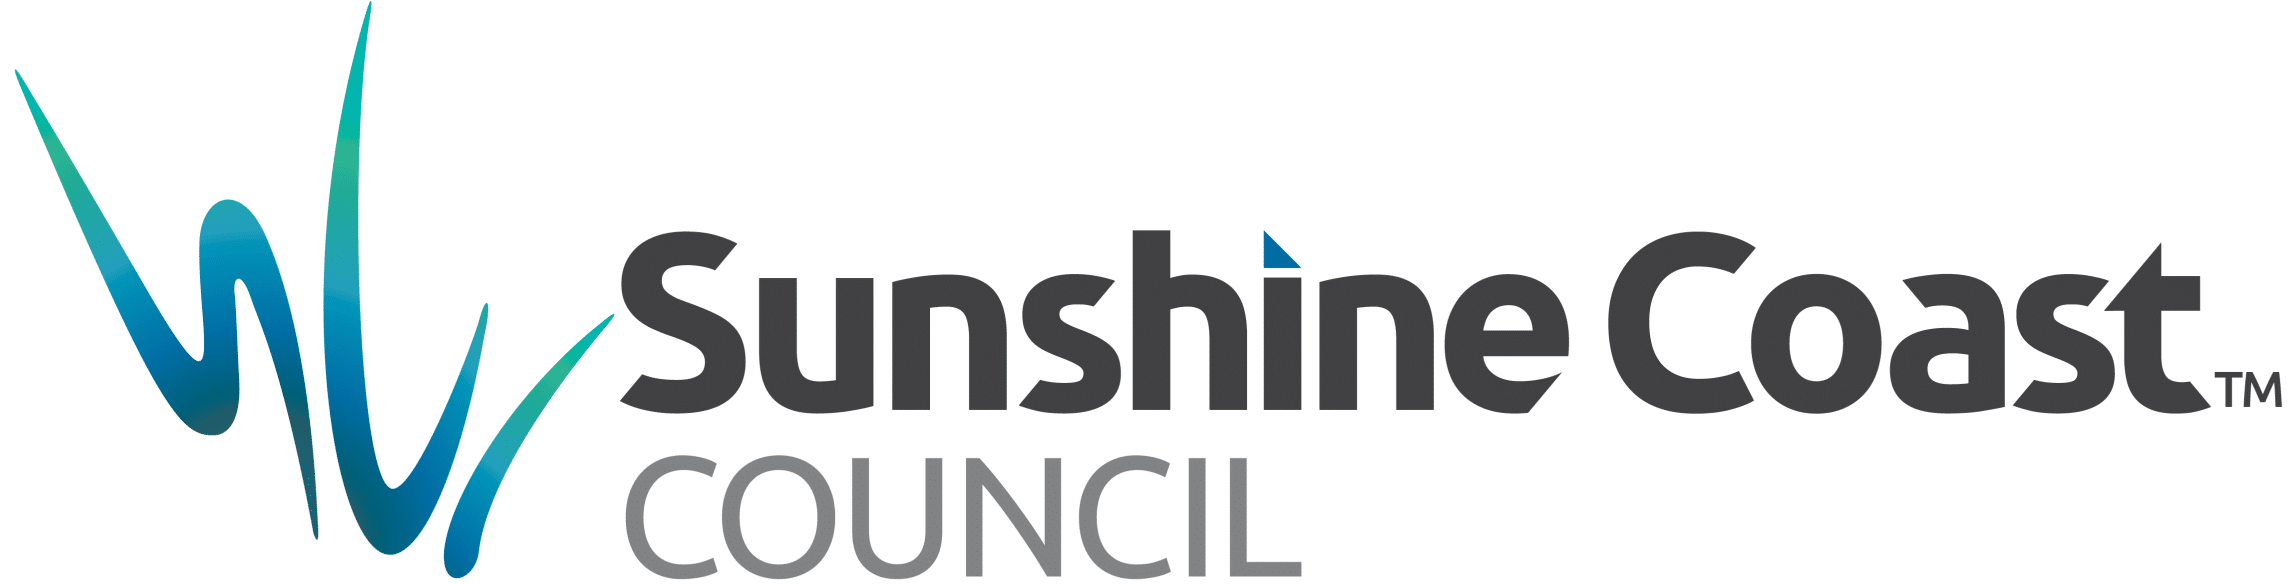 Sunshine Coast Council